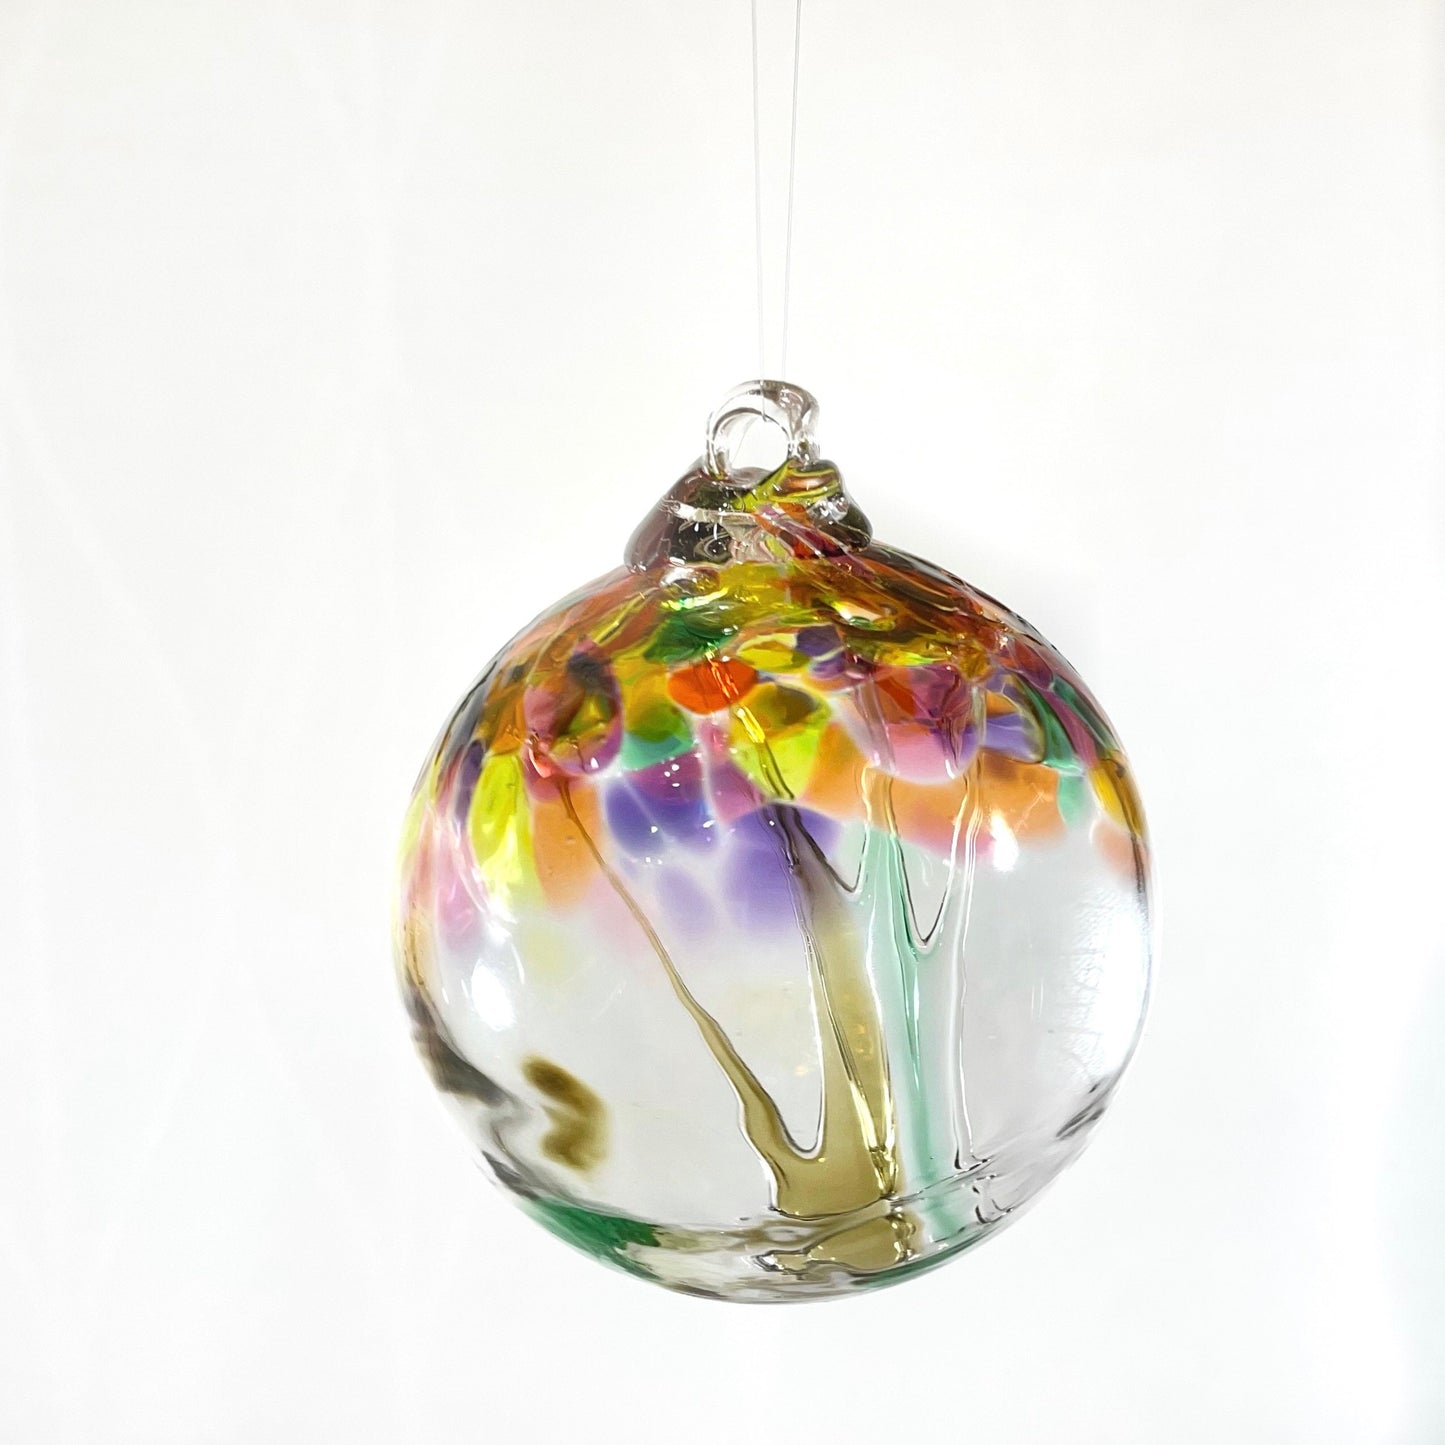 Handmade Glass Art 2” Globe Ornament - Tree of Celebration